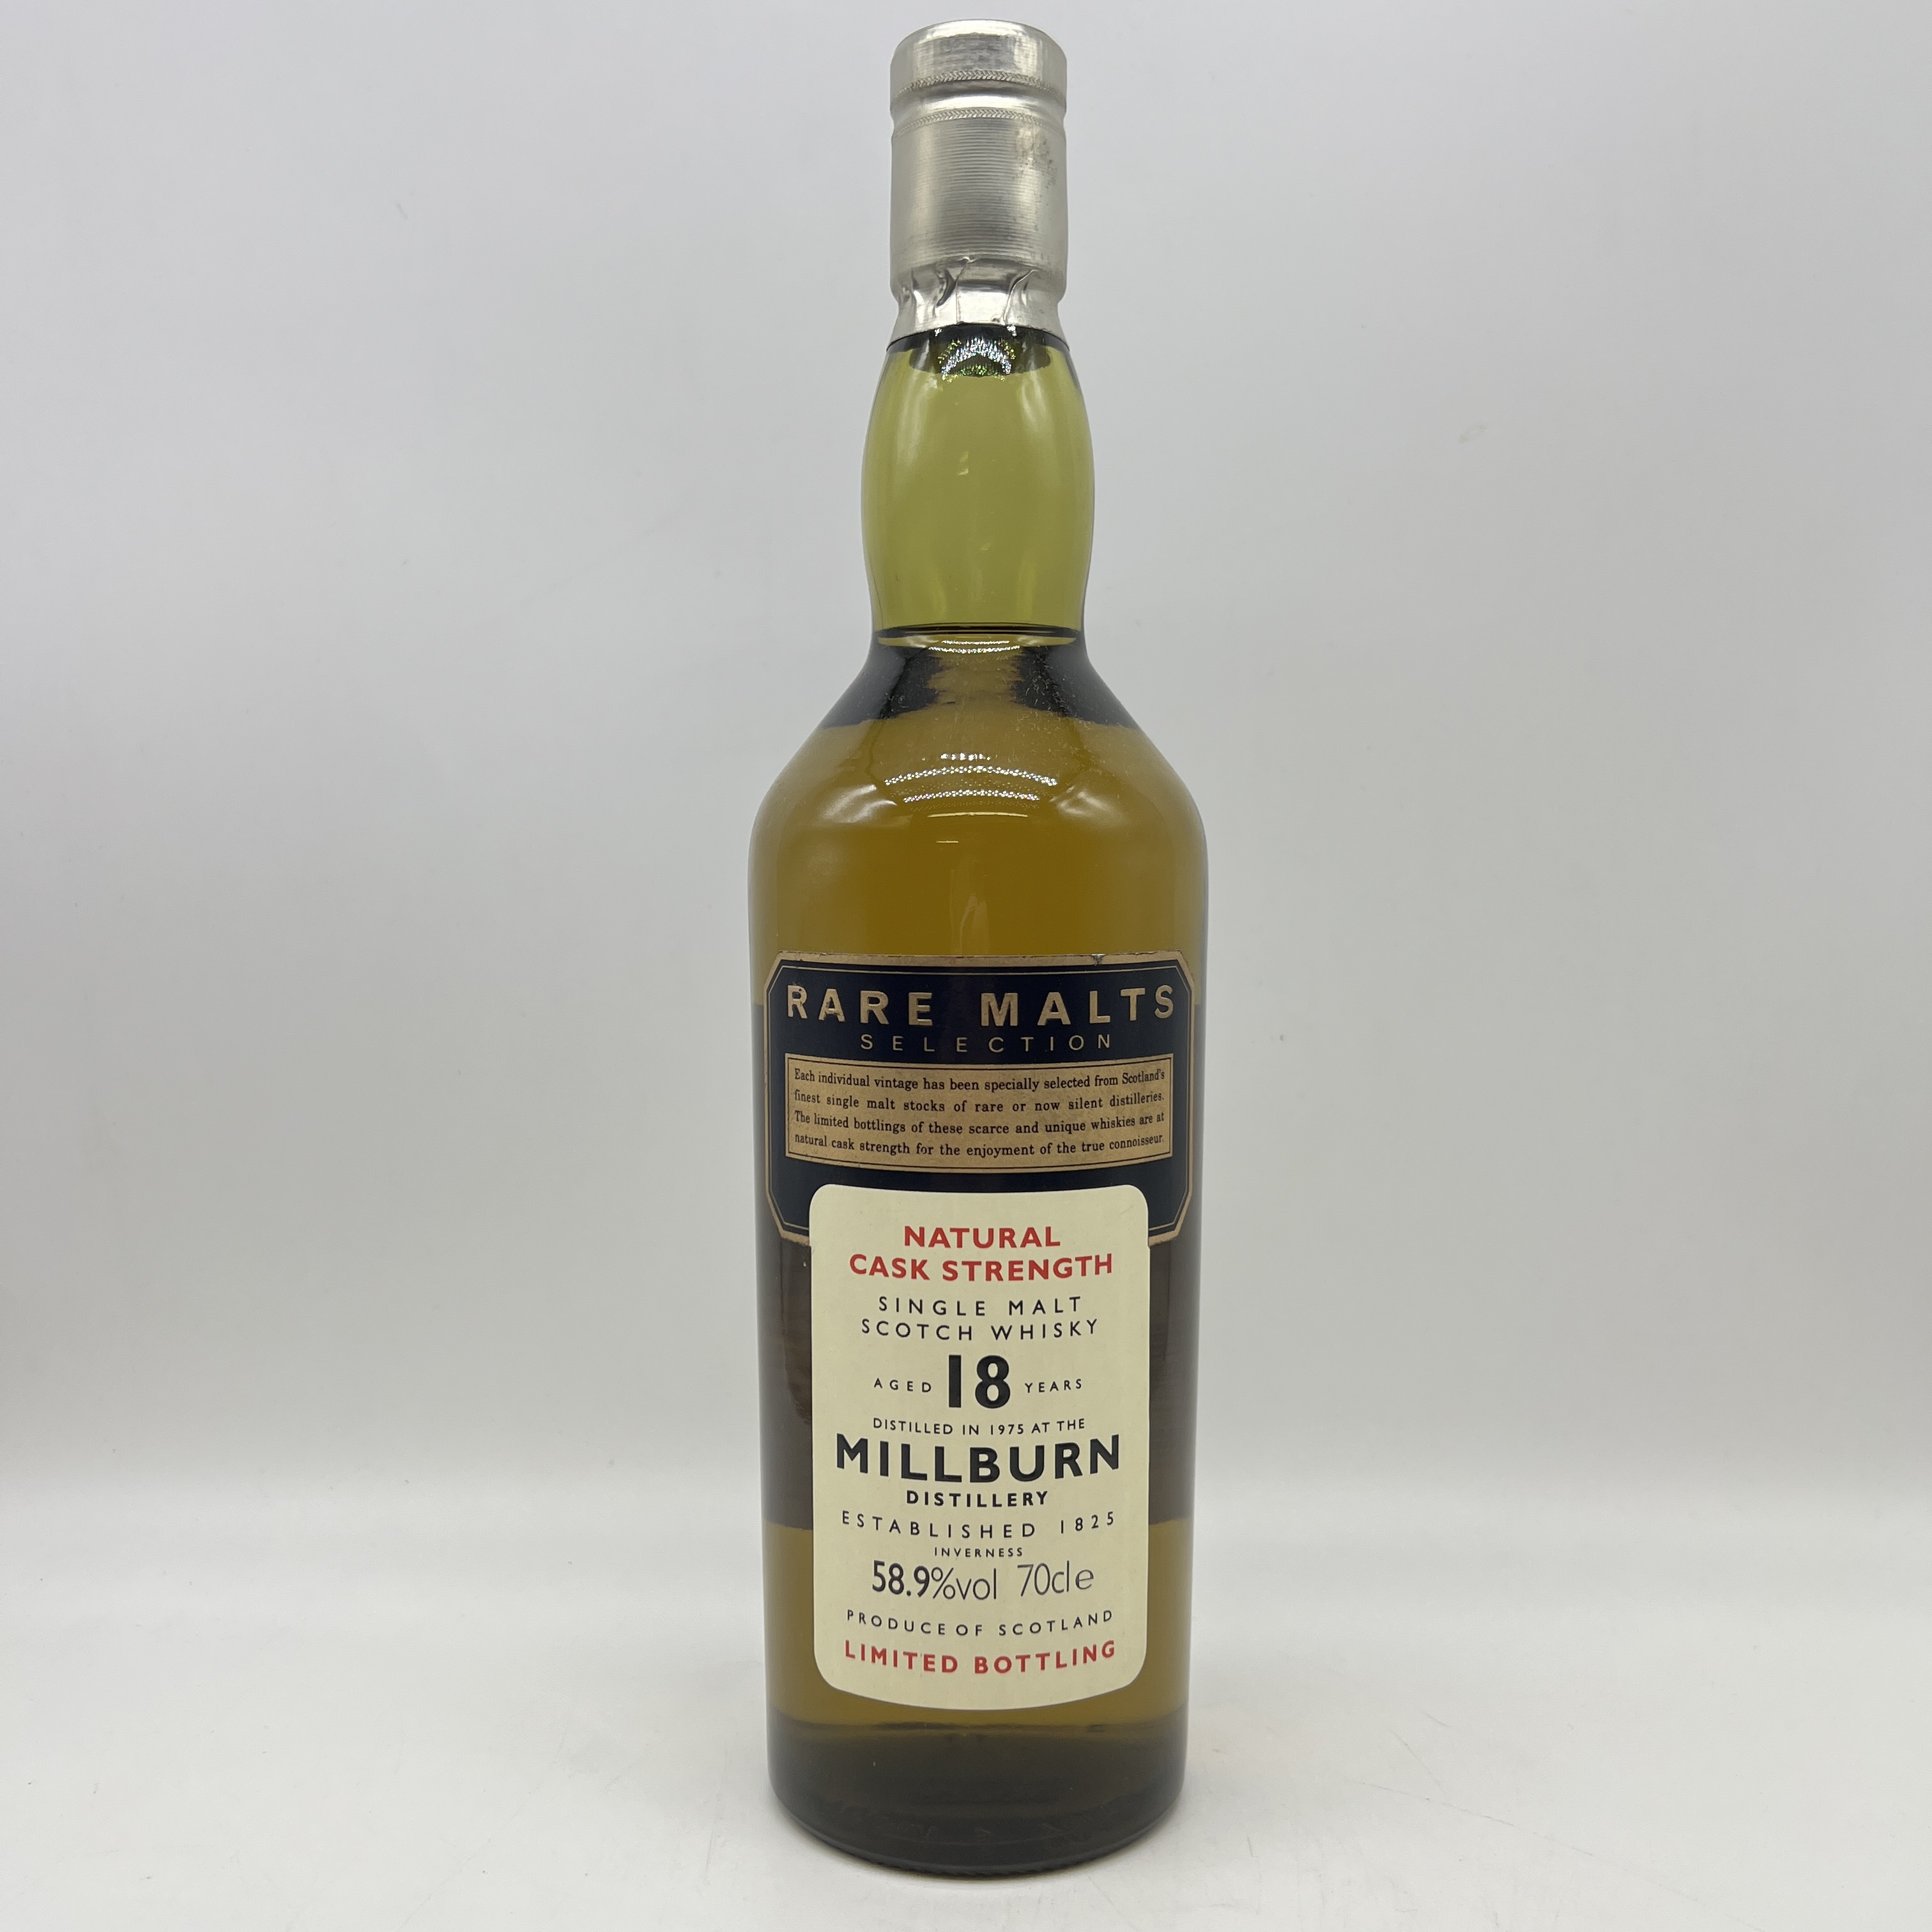 A bottle of rare malt selection Millburn 18 year old whisky